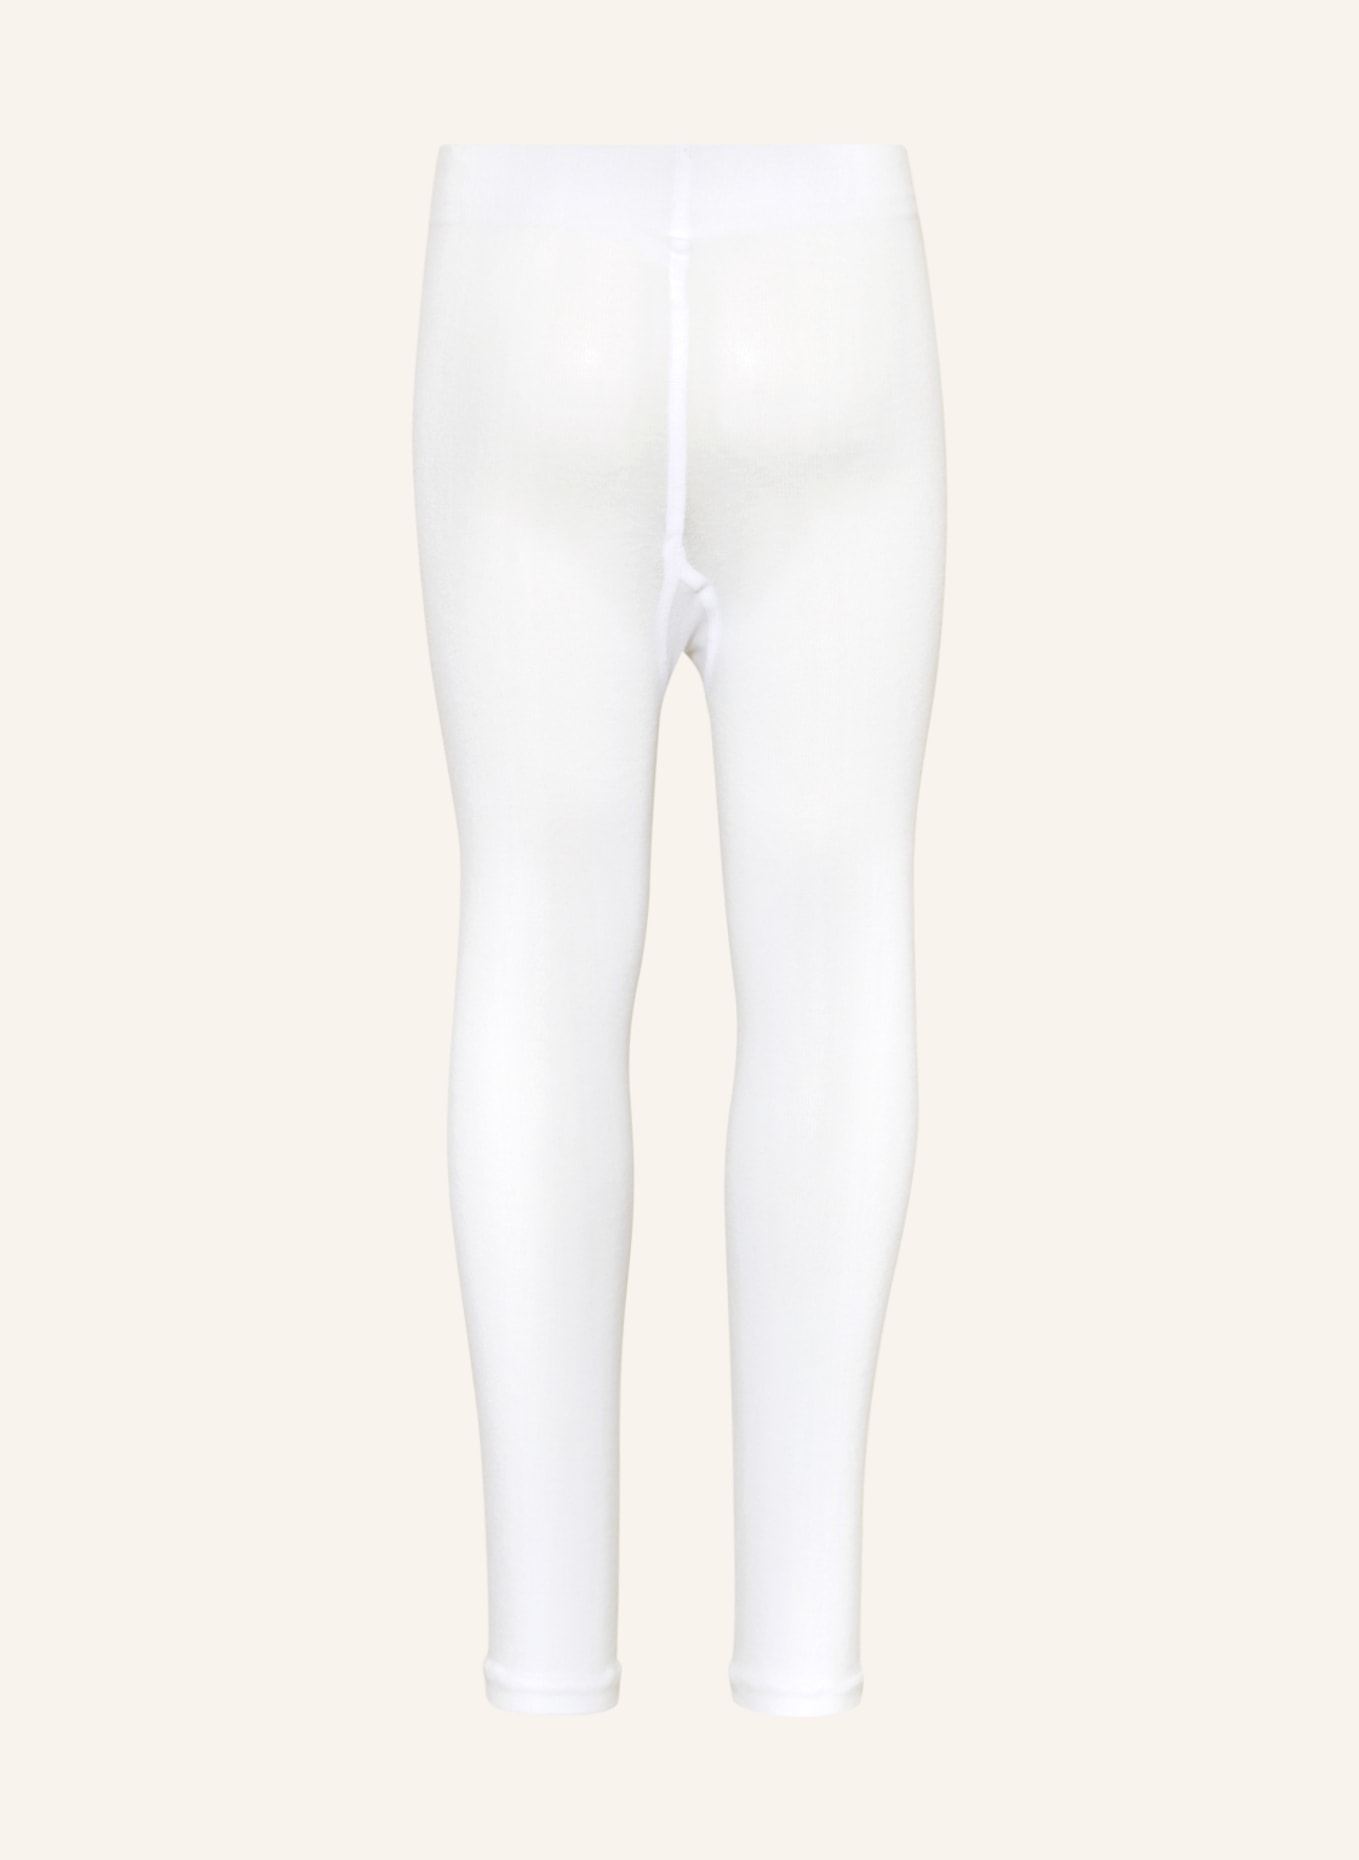 FALKE Leggings COTTON TOUCH, Farbe: 2000 WHITE (Bild 2)